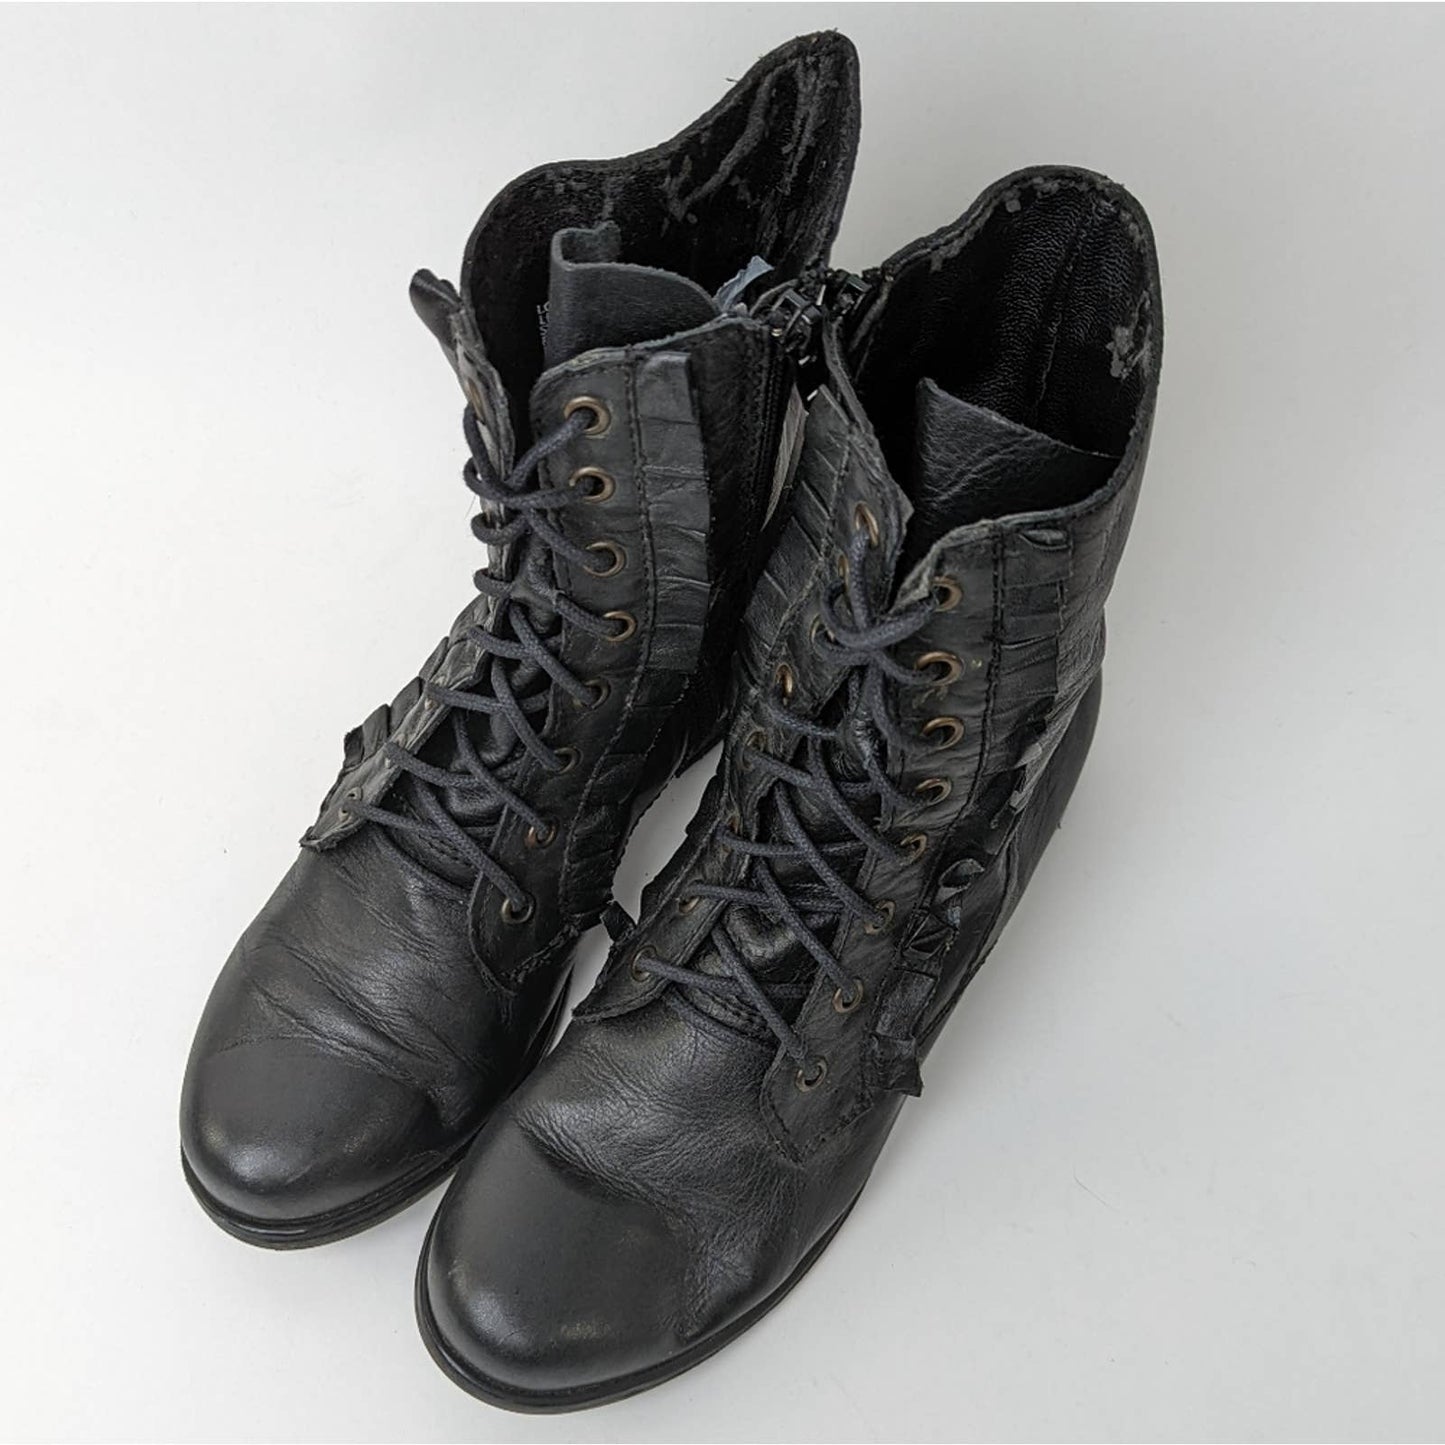 Betsey Johnson Lotso Black Moto Buckle Grunge Combat Boots - 7.5